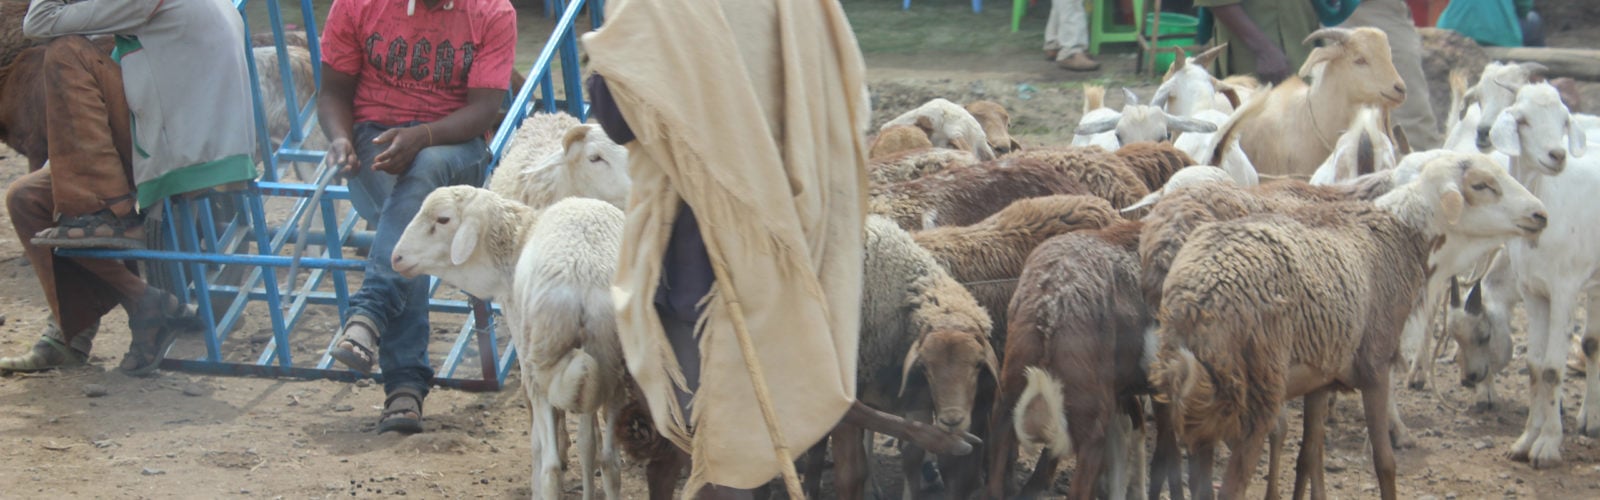 addis-ababa-goats